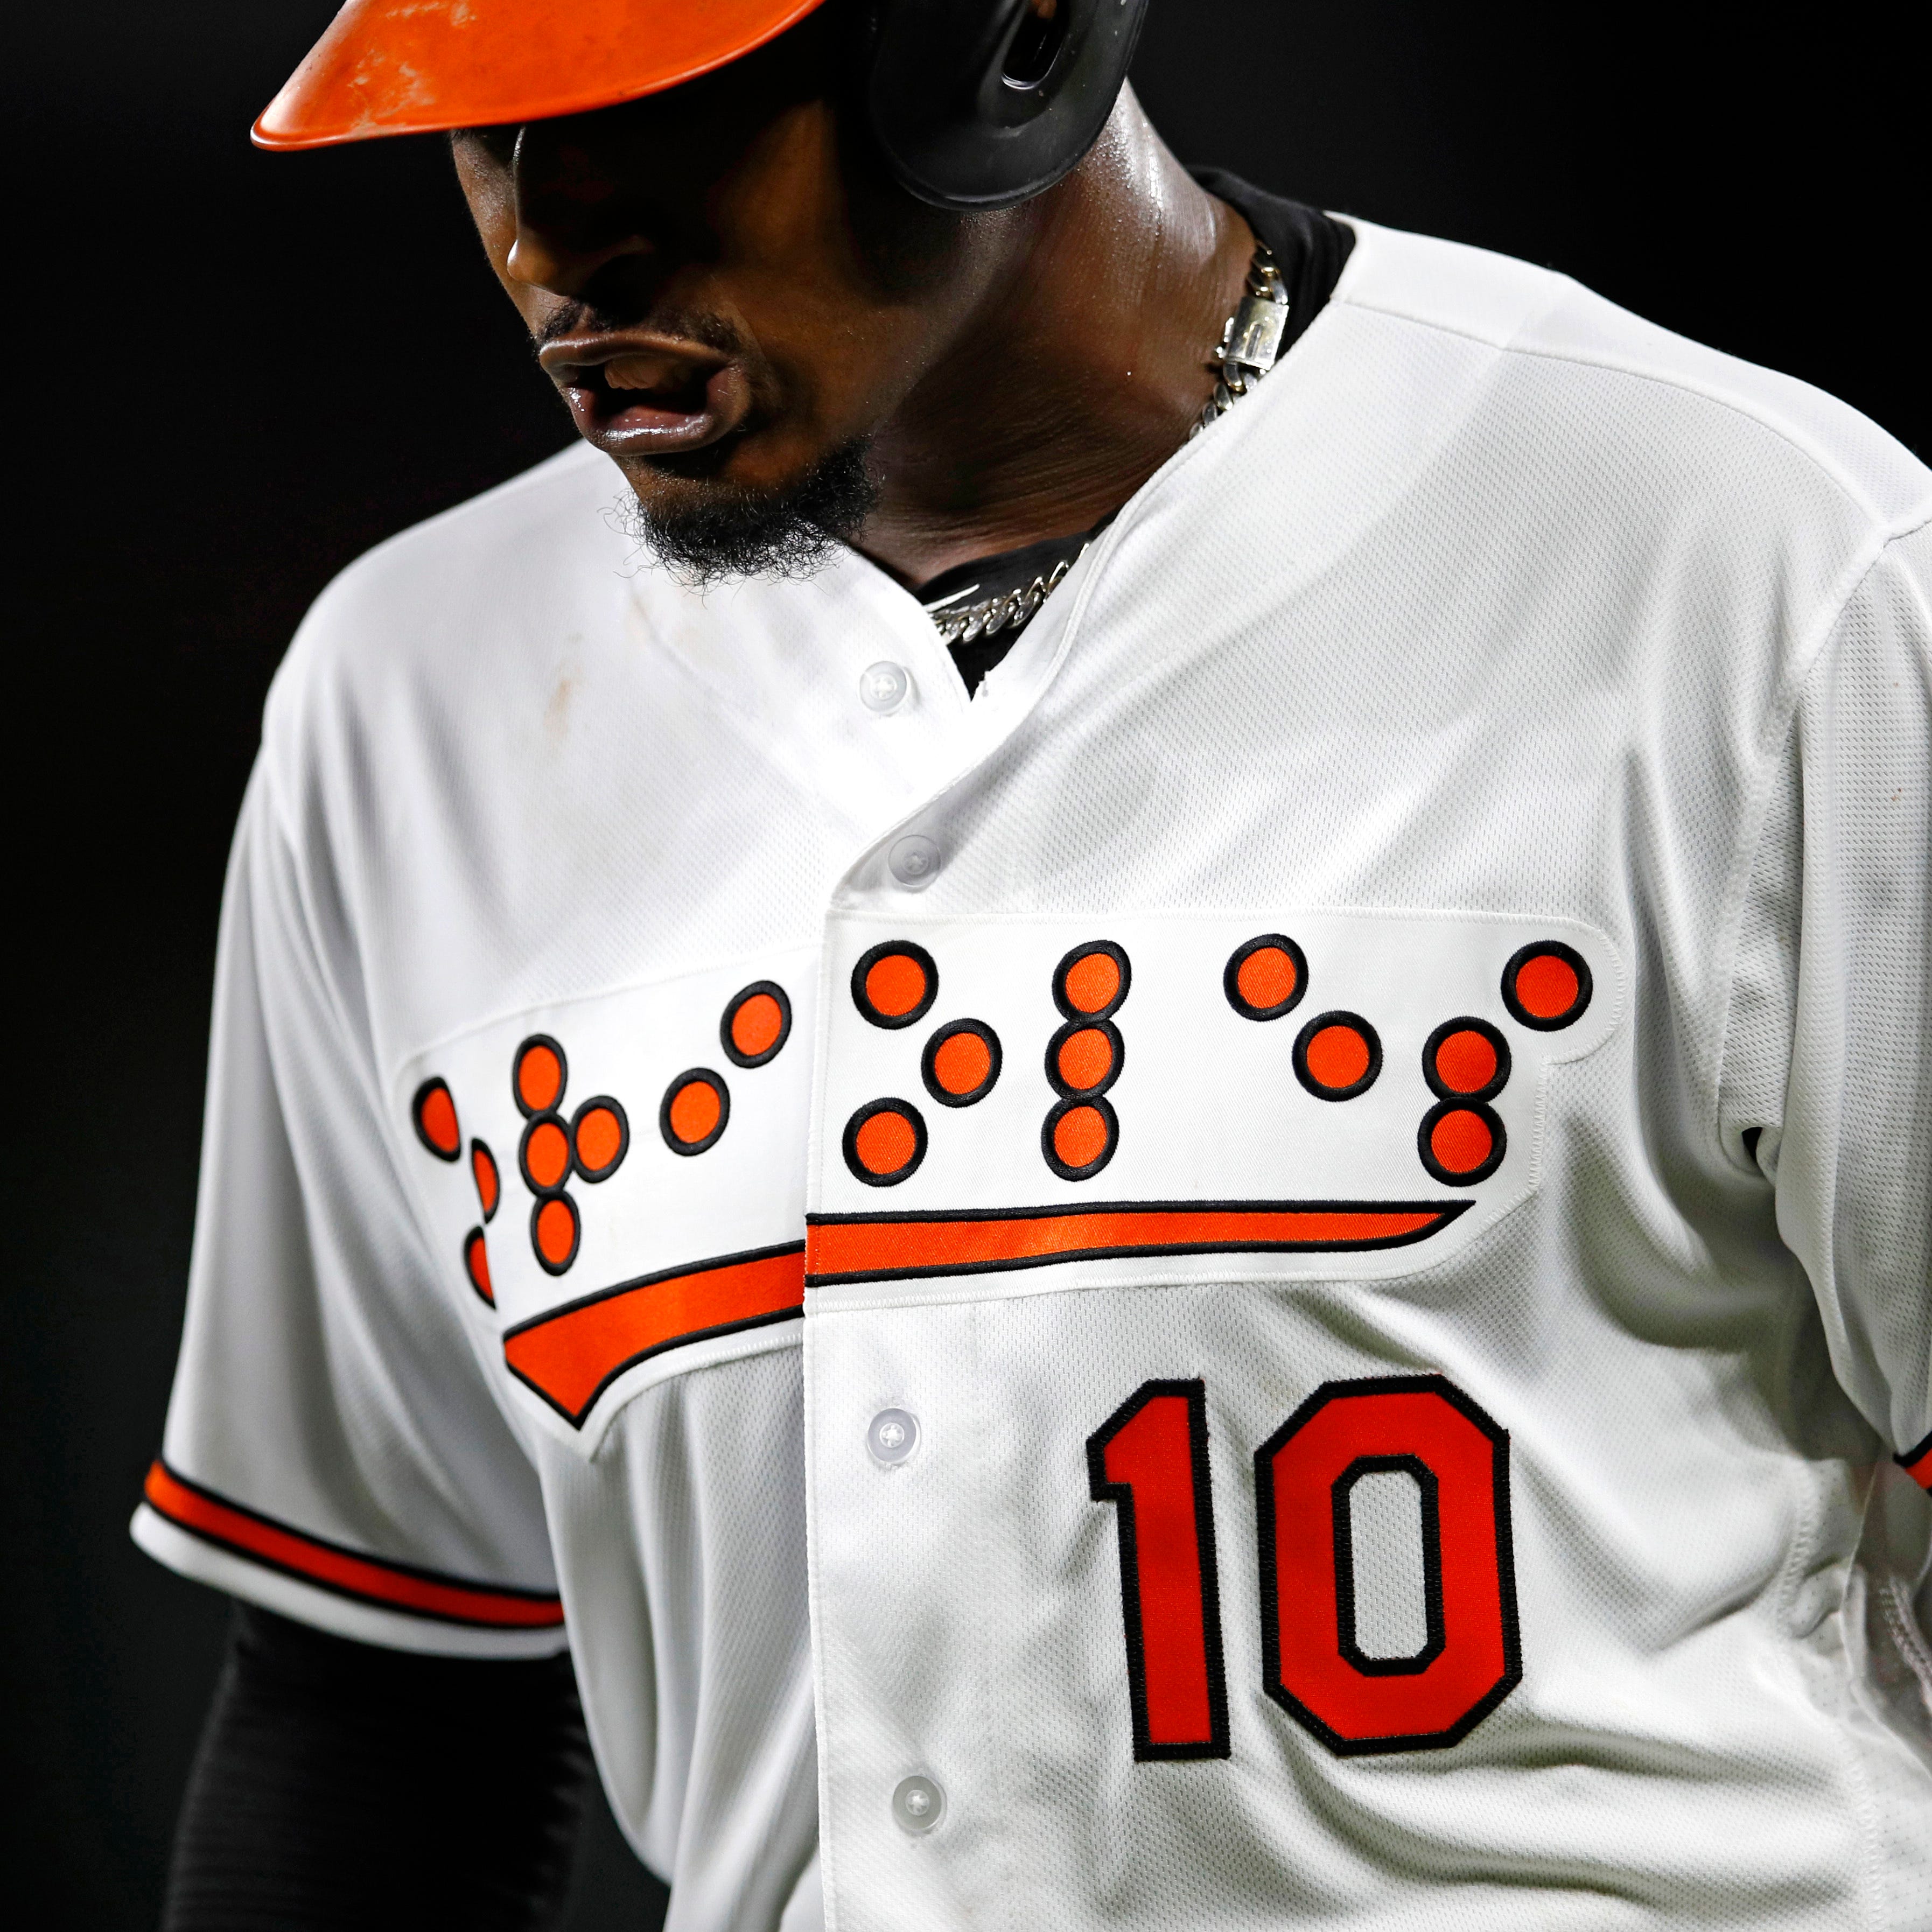 Baltimore Orioles outfielder Adam Jones wears a jersey that reads 